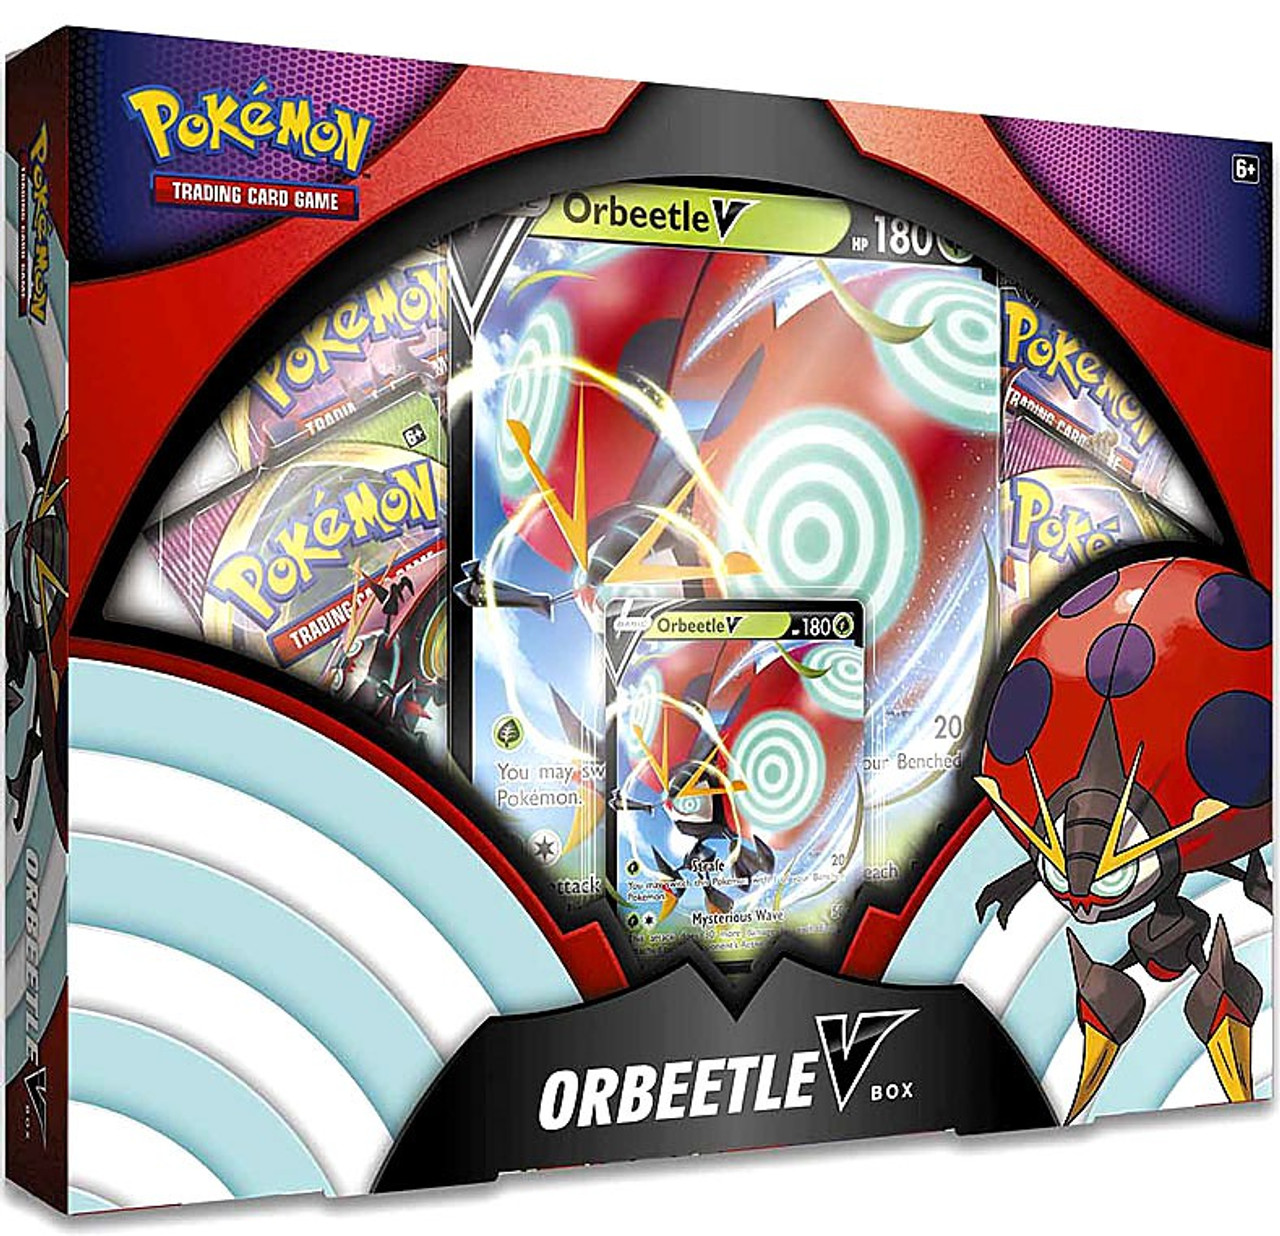 Pokemon Trading Card Game Sword Shield Orbeetle V Box 4 Booster Packs Promo Card Oversize Card Pokemon Usa Toywiz